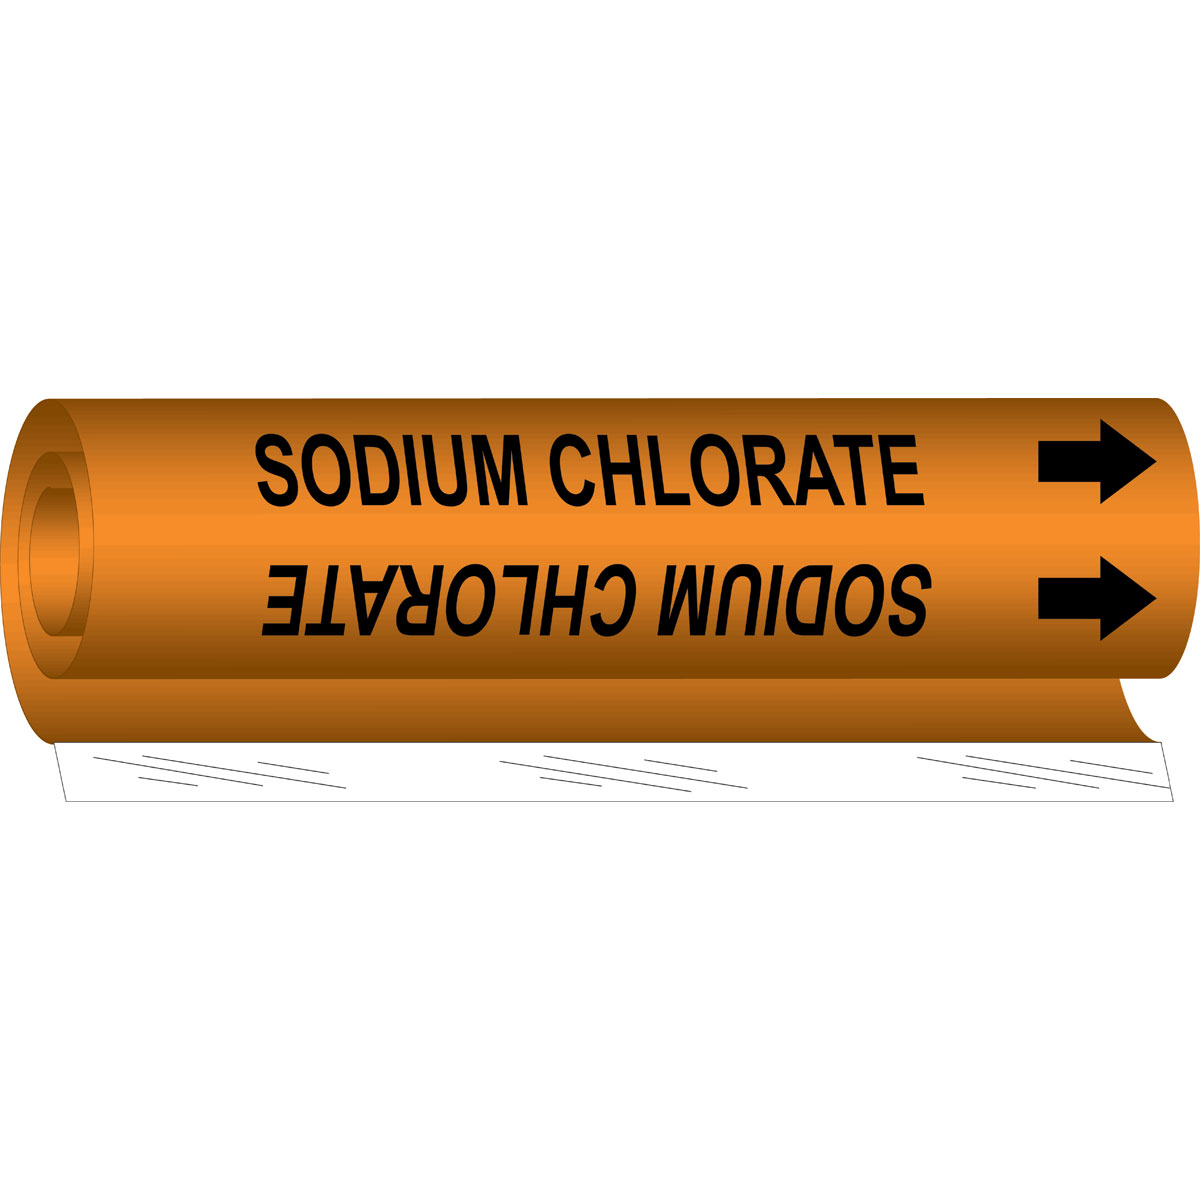 Legend Sodium Chlorate Legend Sodium Chlorate Black On Orange Pvf Over-Laminated Polyester B-689 Wrap Around Pipe Marker Brady 5849-Ii High Performance 